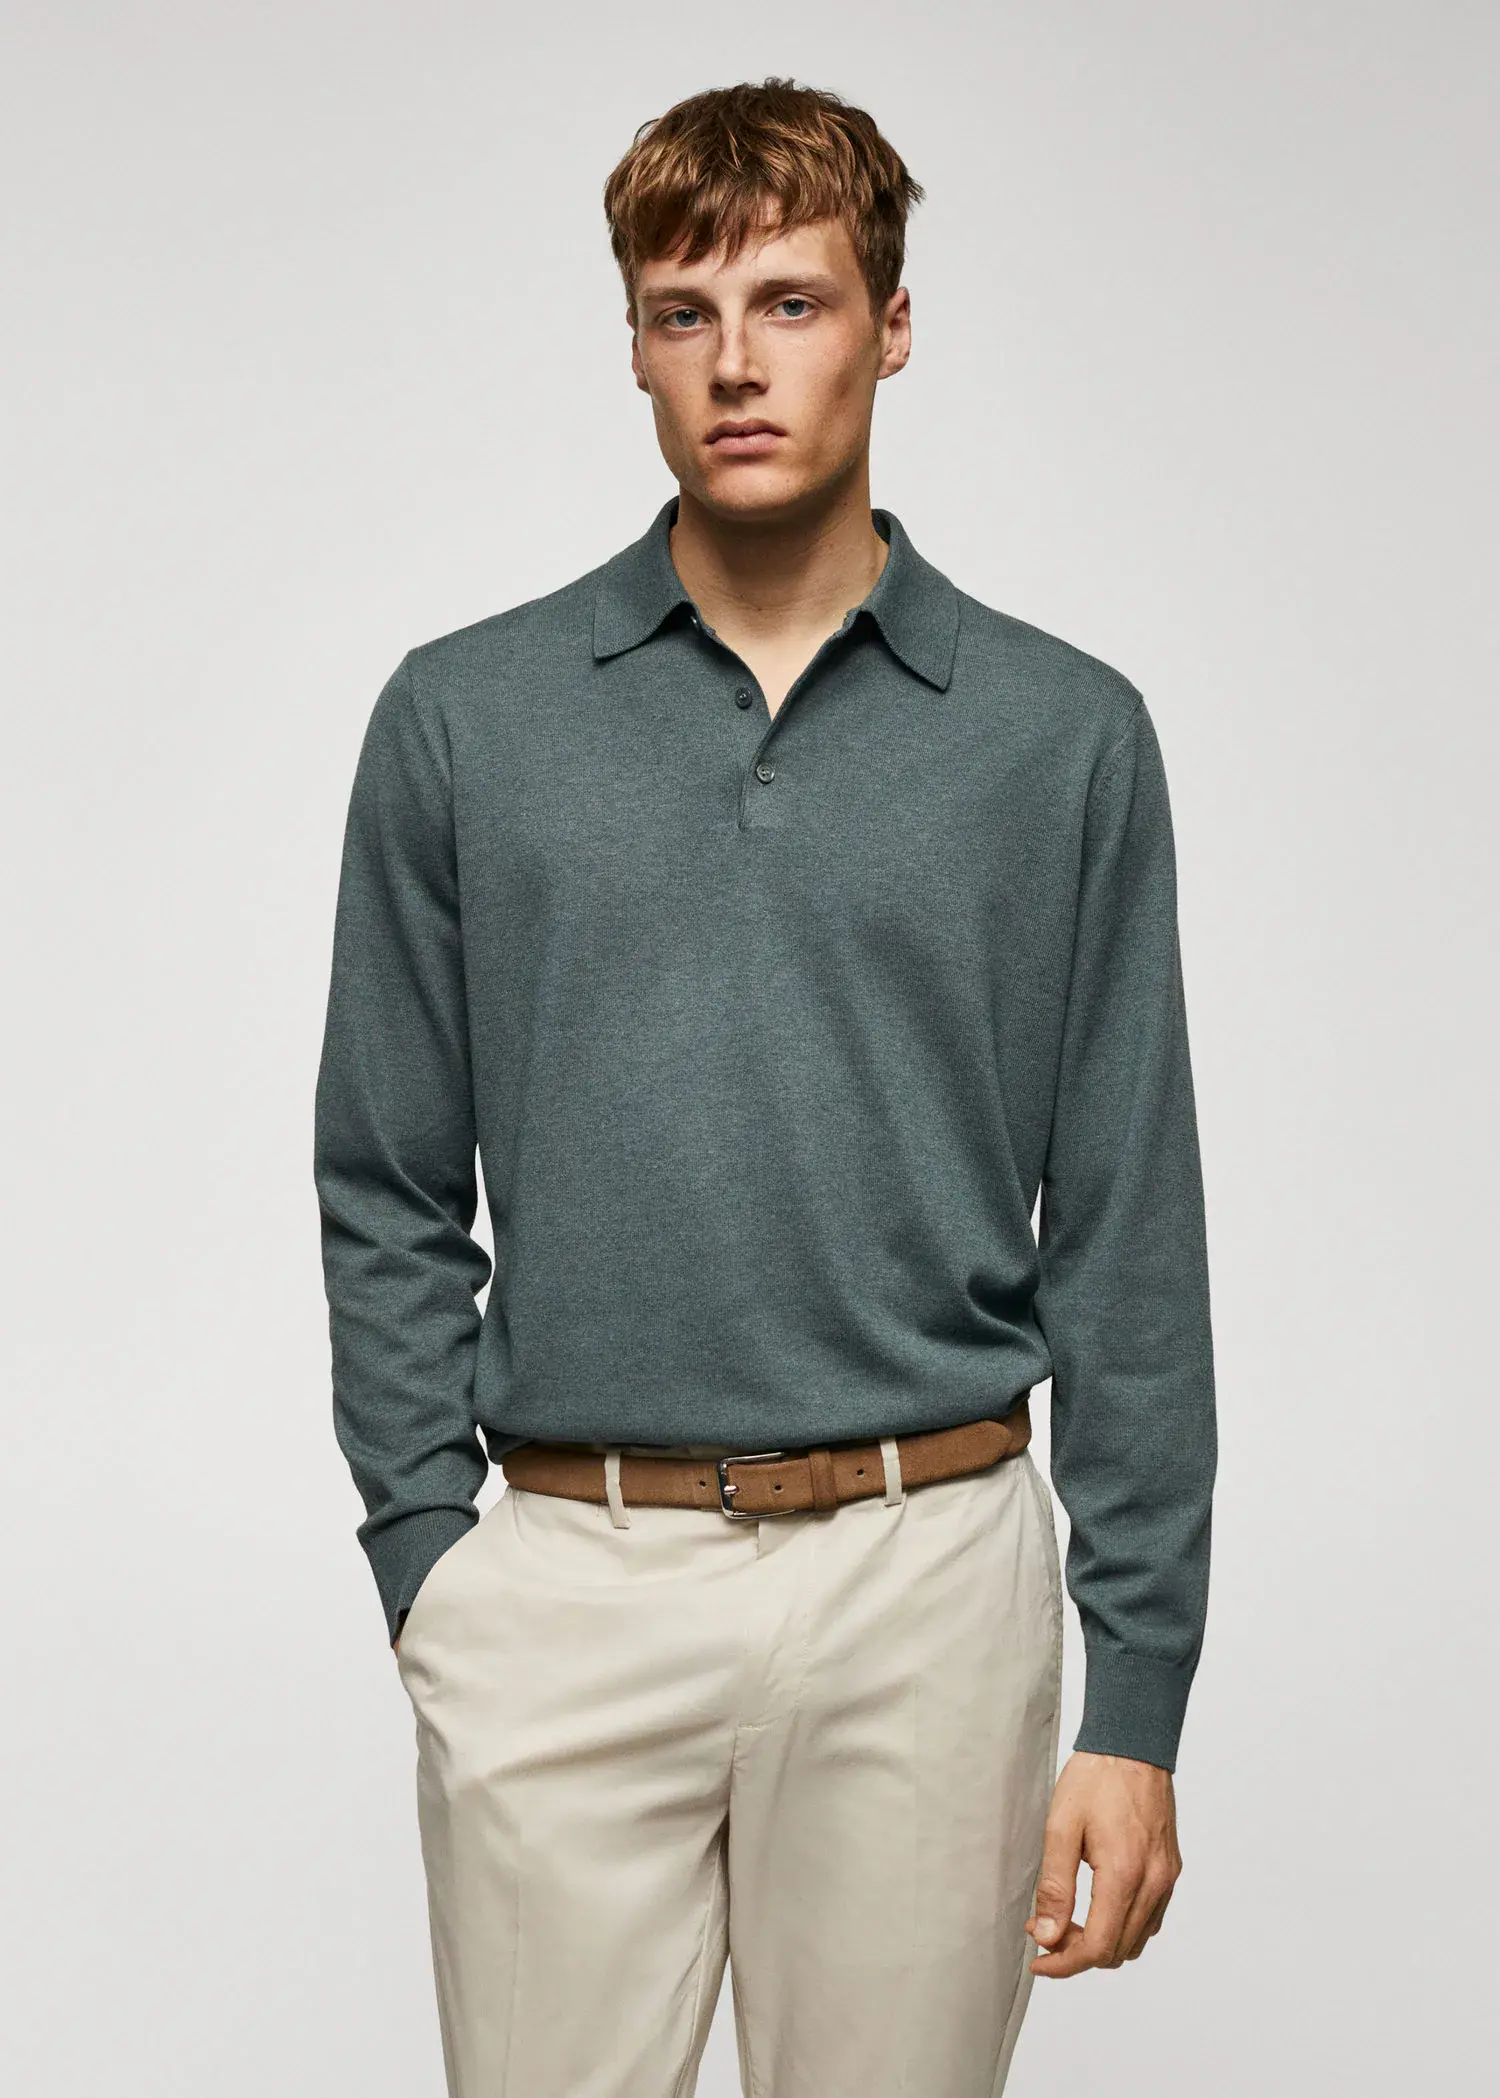 Mango Long-sleeved cotton jersey polo shirt. a man wearing a green shirt and beige pants. 